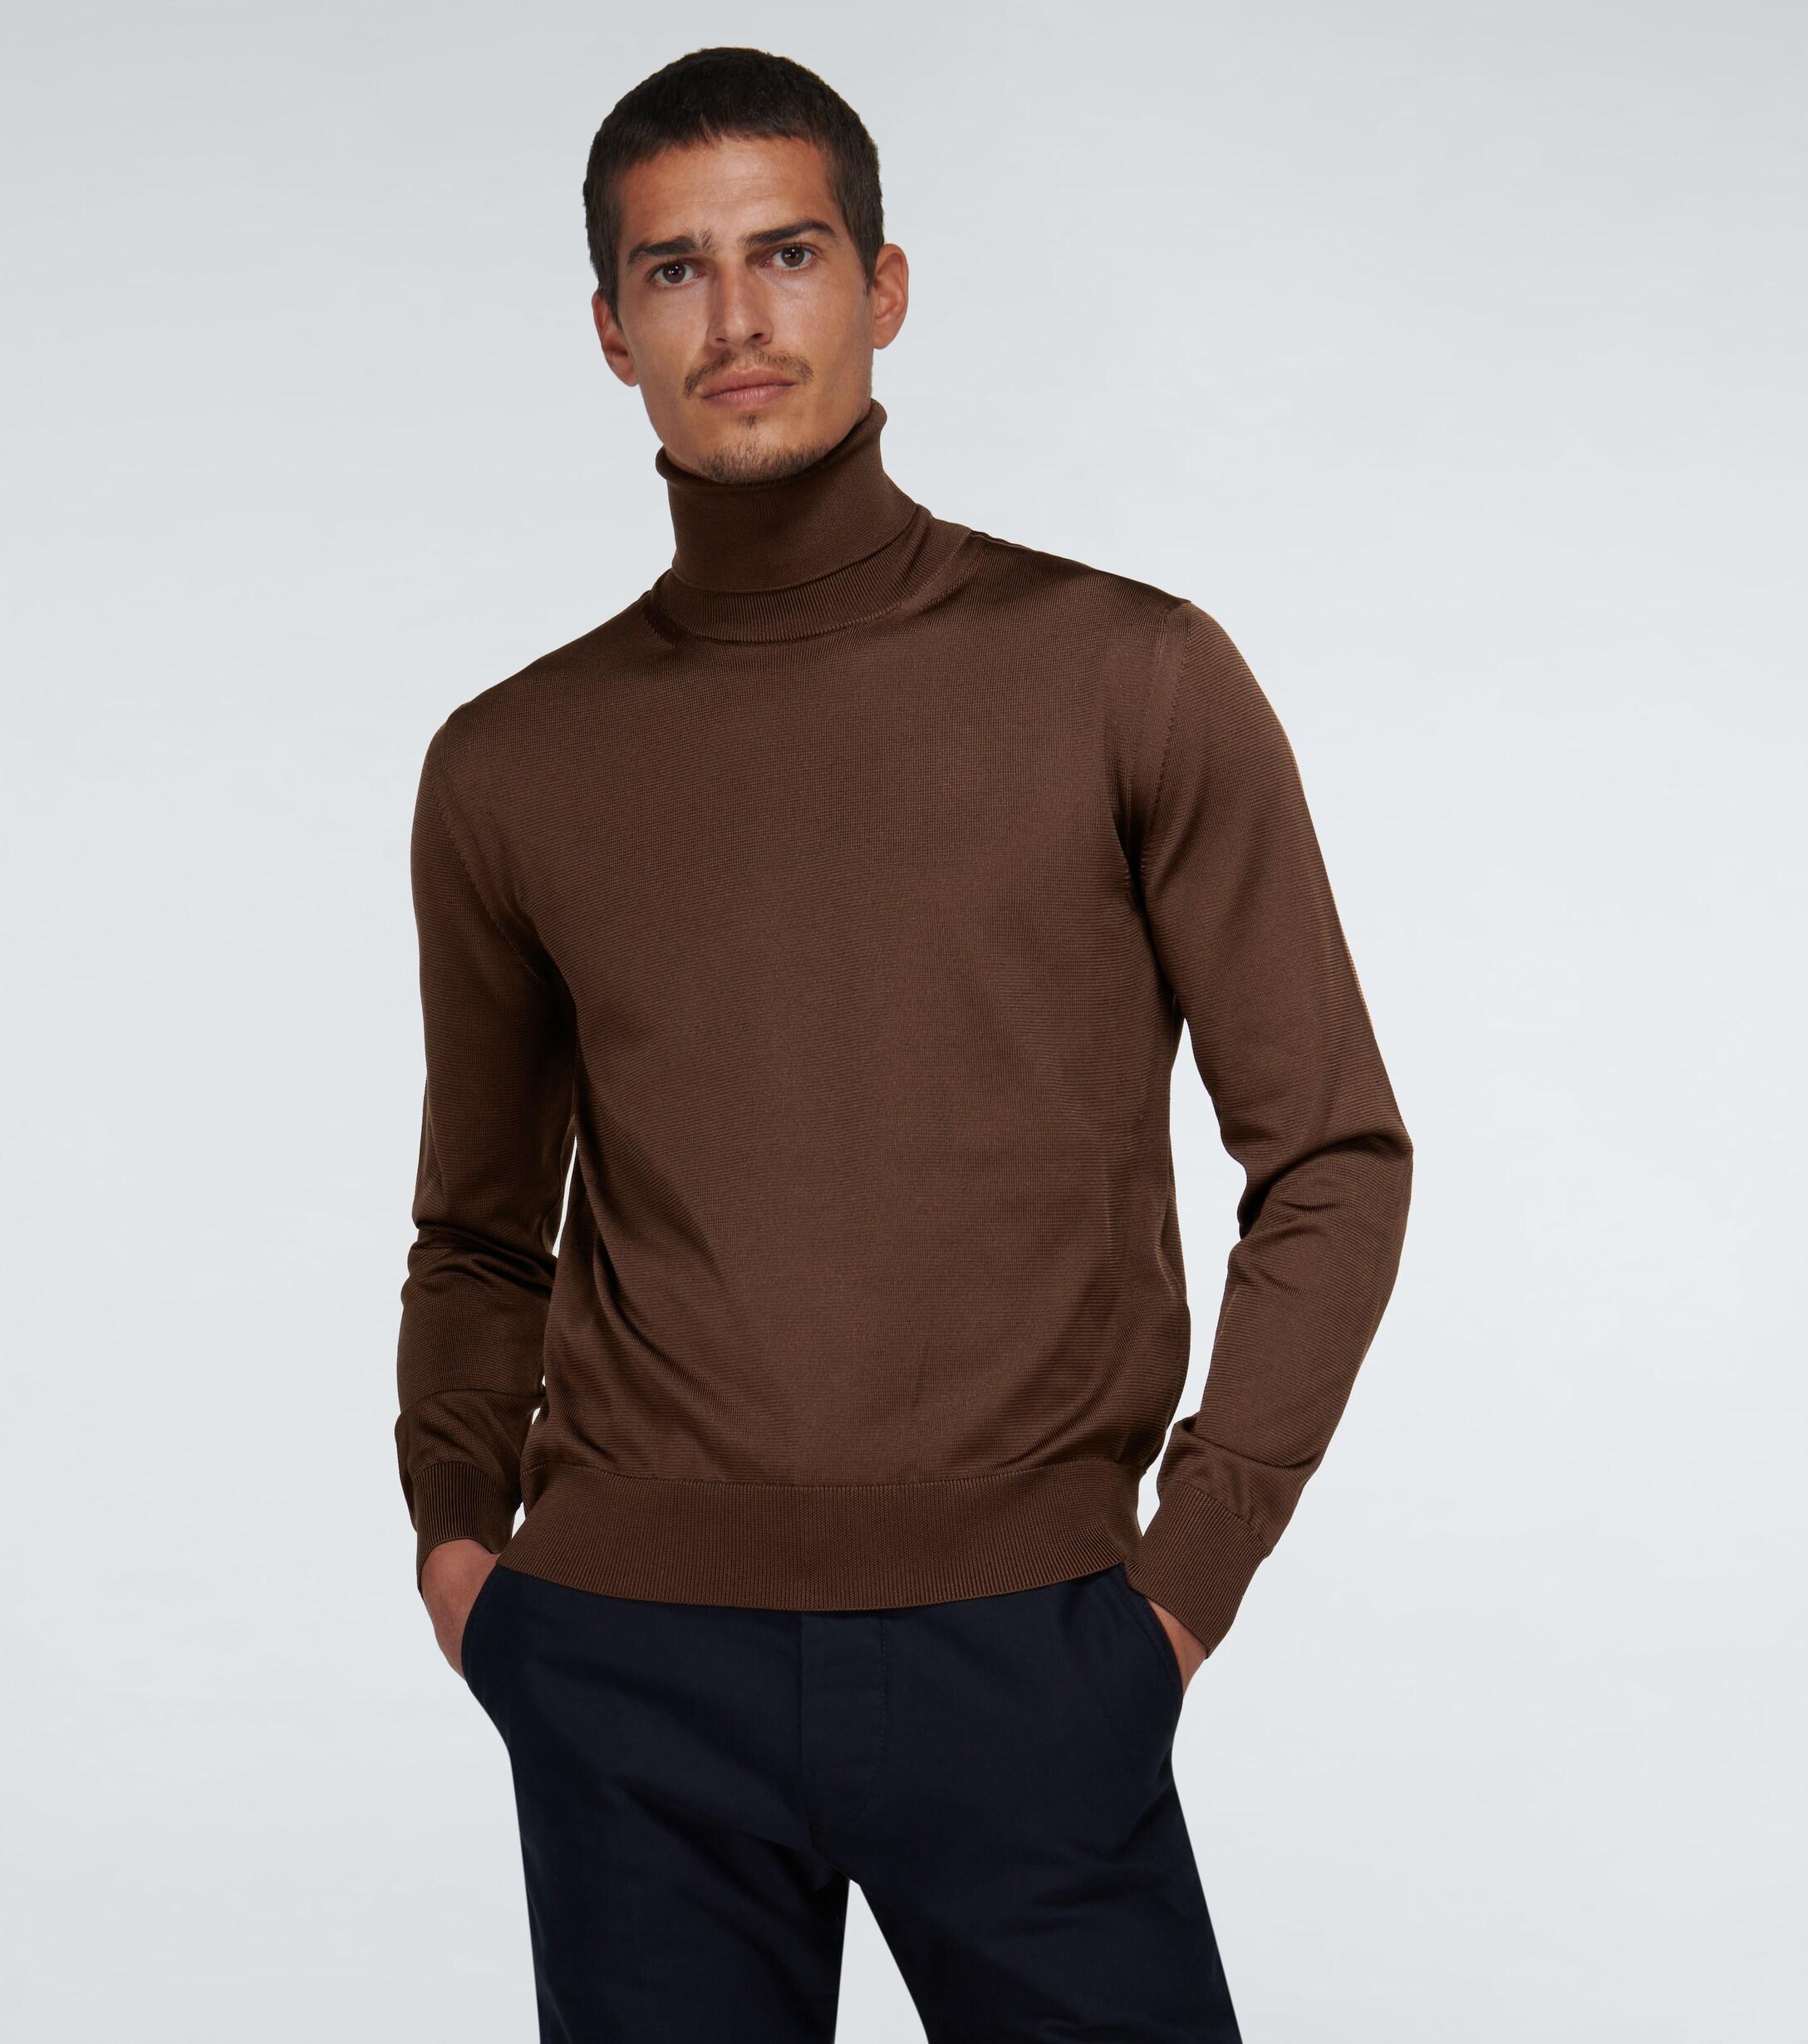 Tom Ford Long-sleeved Turtleneck Sweater in Brown for Men - Lyst